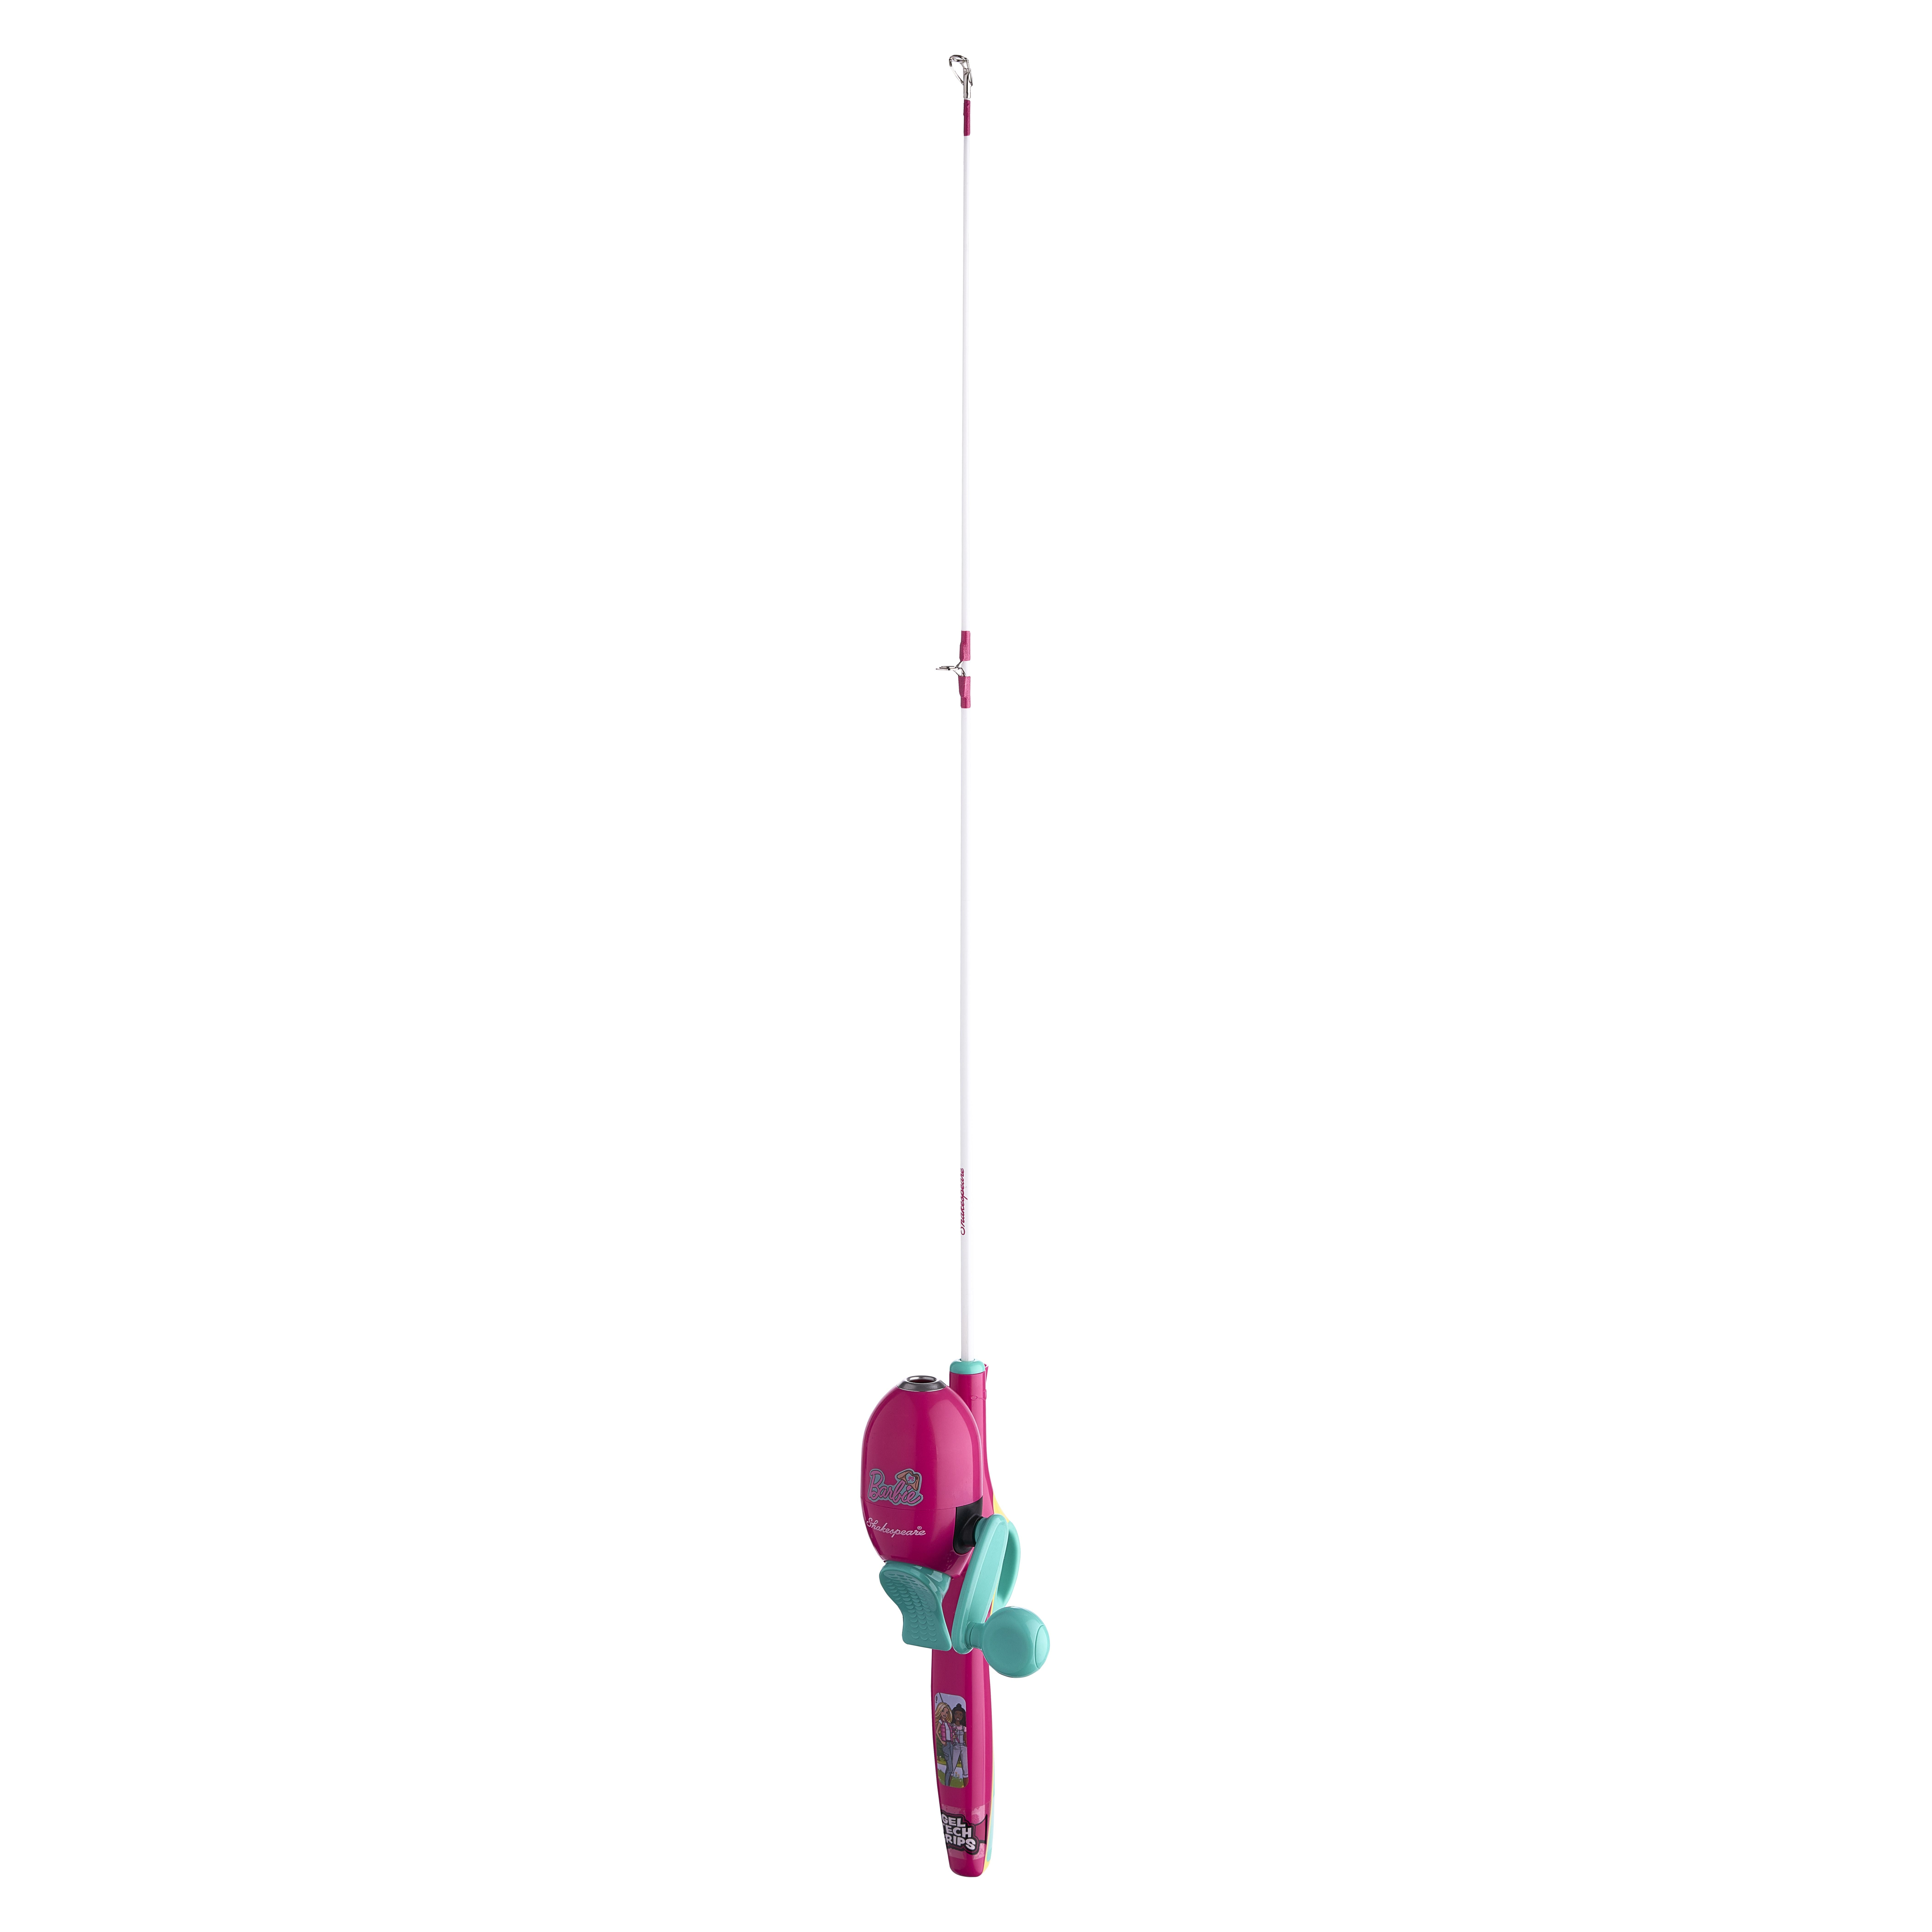 2008 Barbie Kids Fishing Kit BRAND NEW